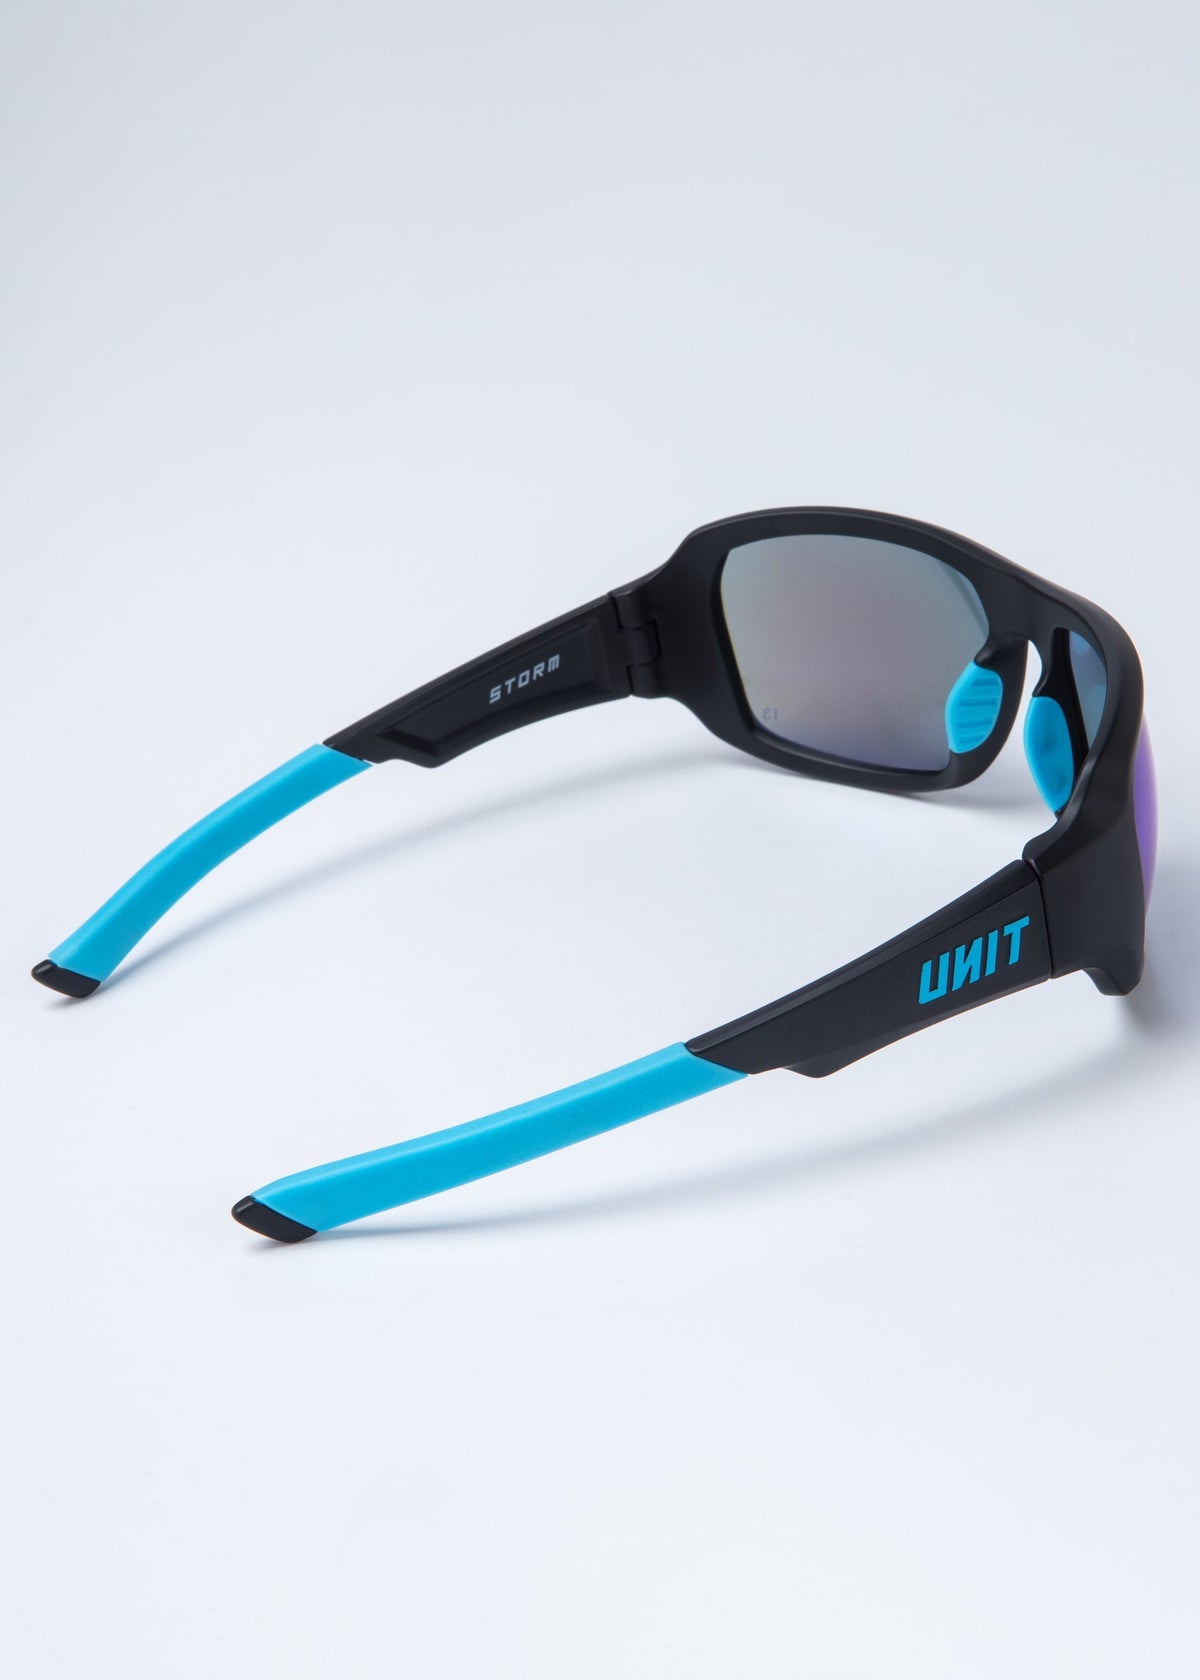 UNIT Storm Safety Glasses